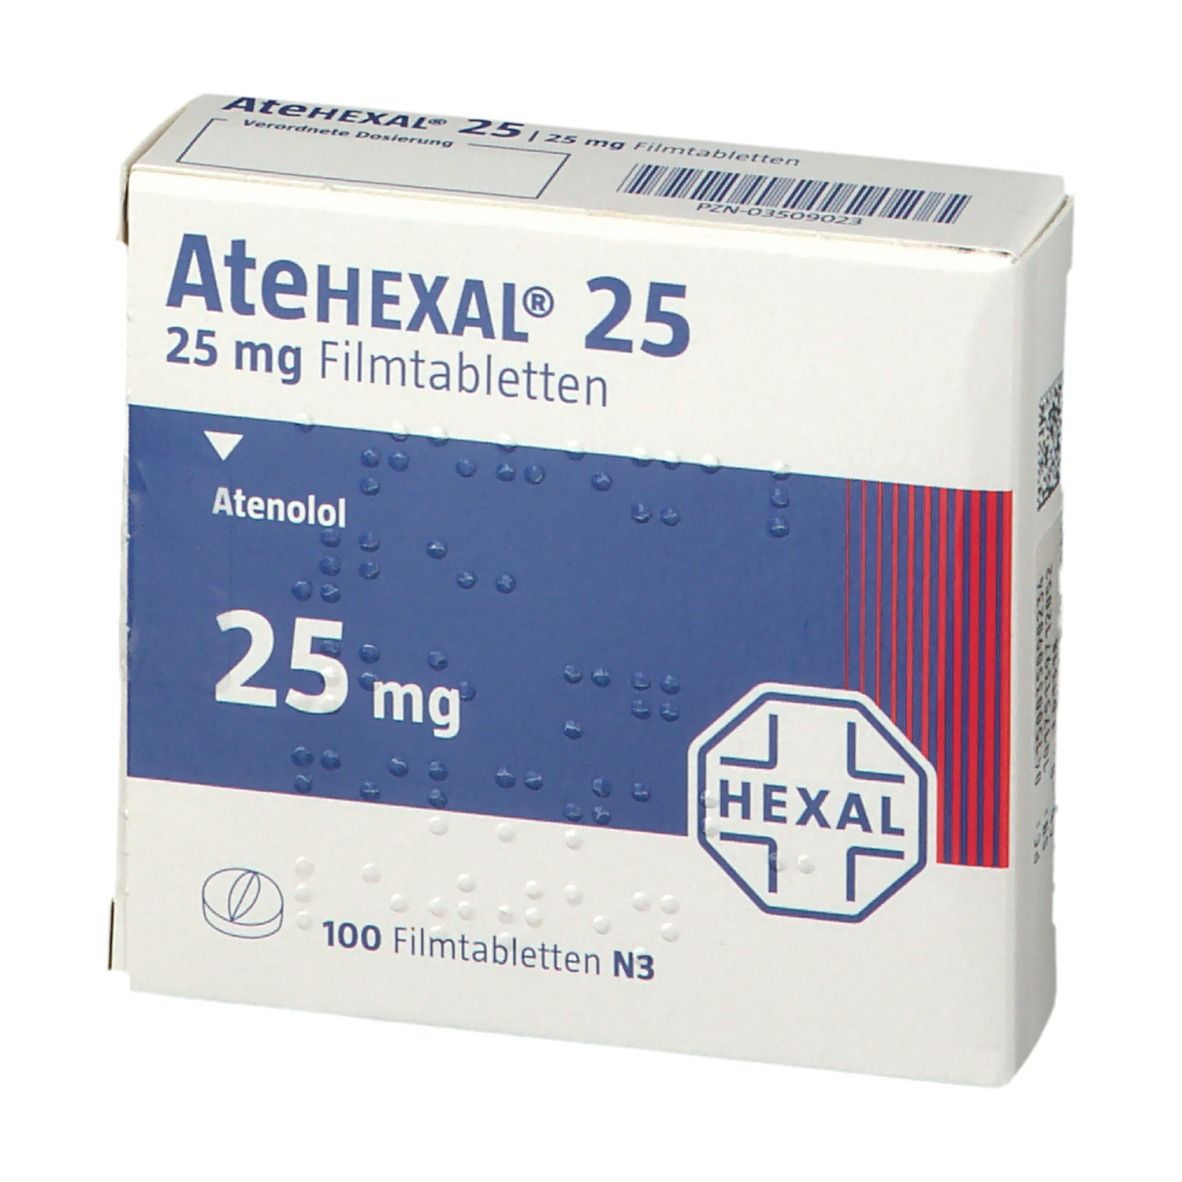 AteHEXAL® 25 mg